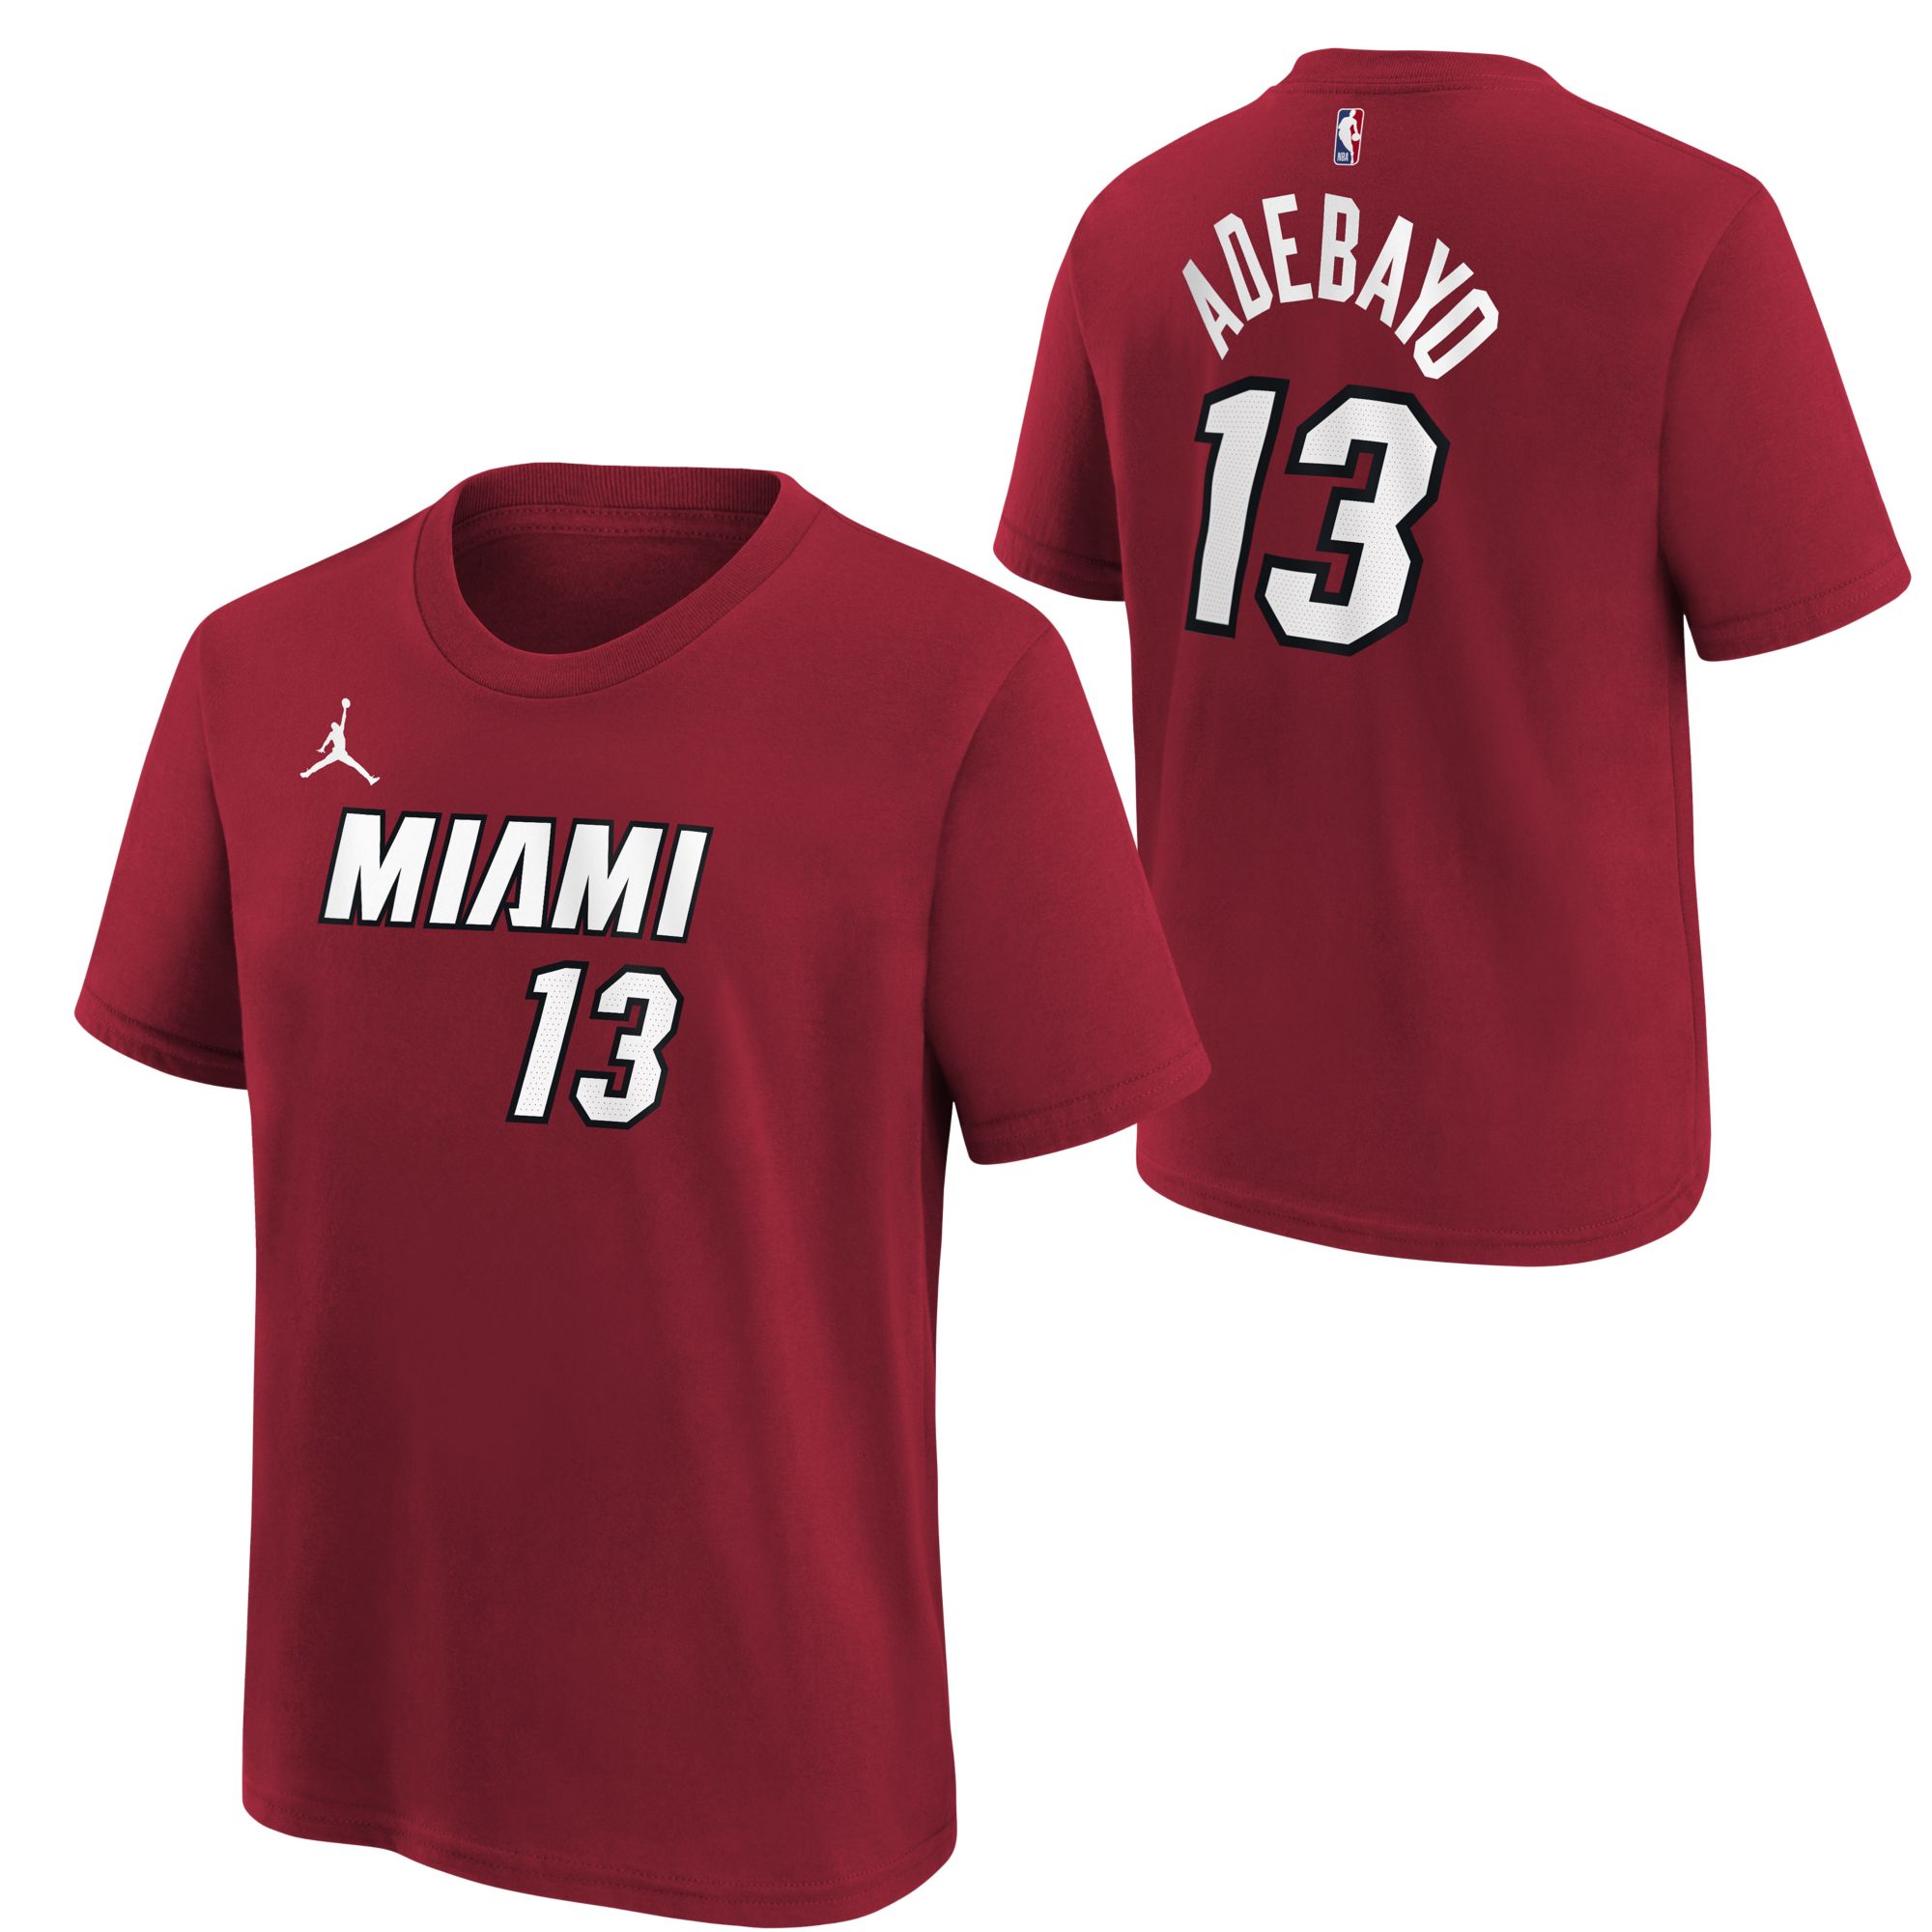 Miami Heat Youth Showtime Long Sleeve T-Shirt - Black